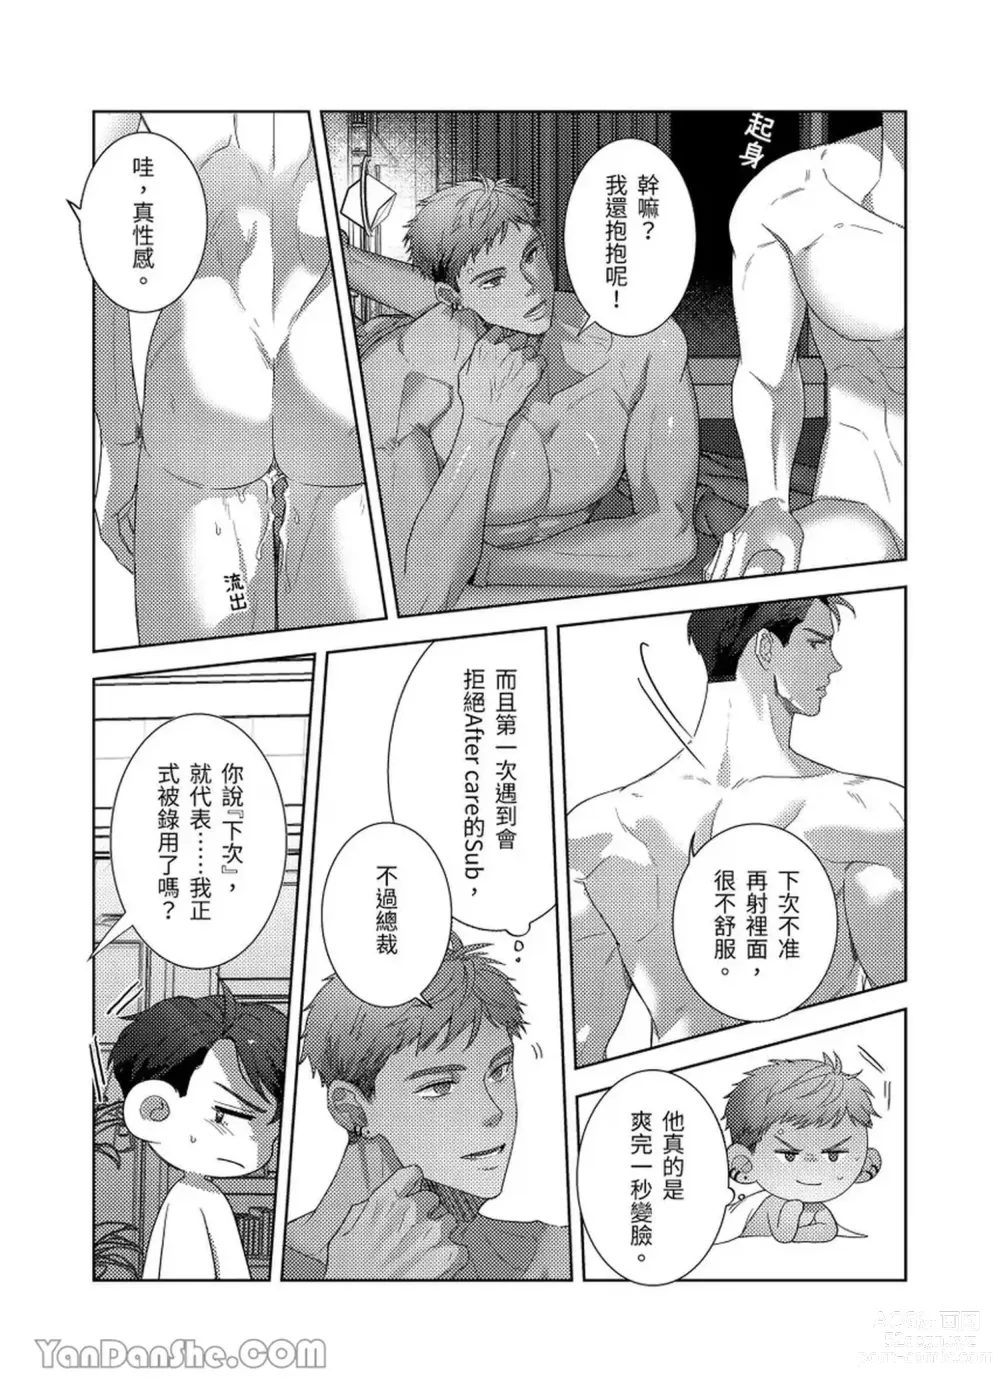 Page 55 of manga Dom&Sub